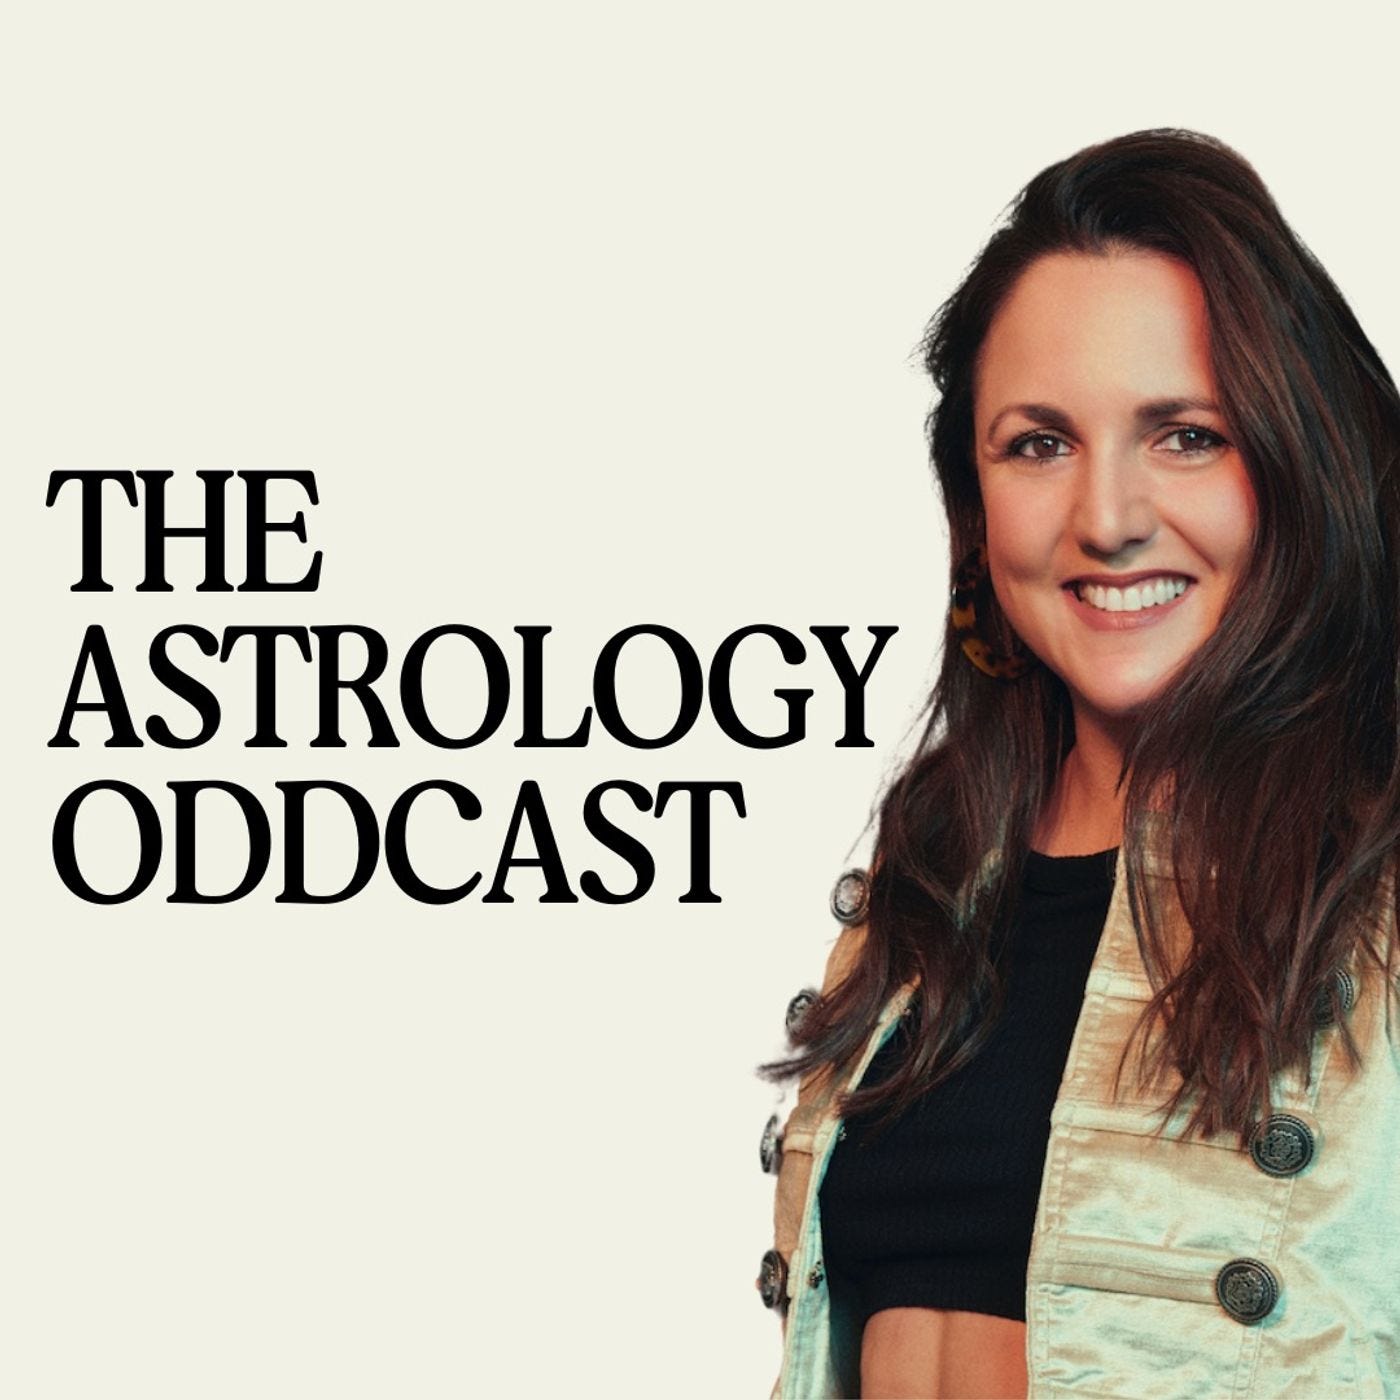 Astrology Oddcast Update